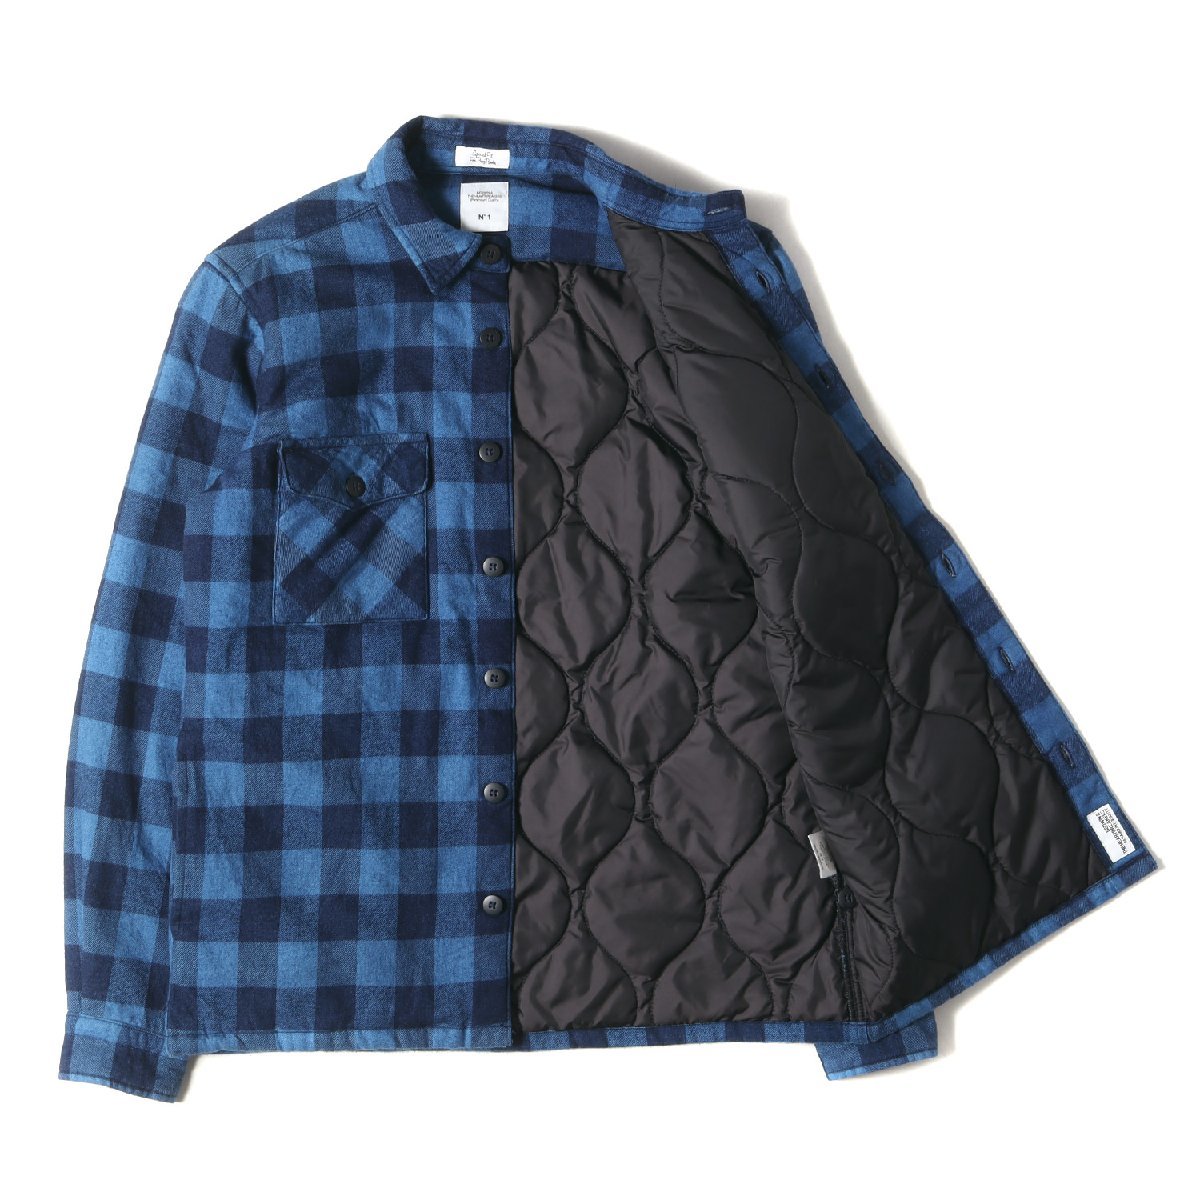 BEDWINbedo wing jacket size :1 lining quilting indigo check flannel shirt jacket indigo blue blur ndo